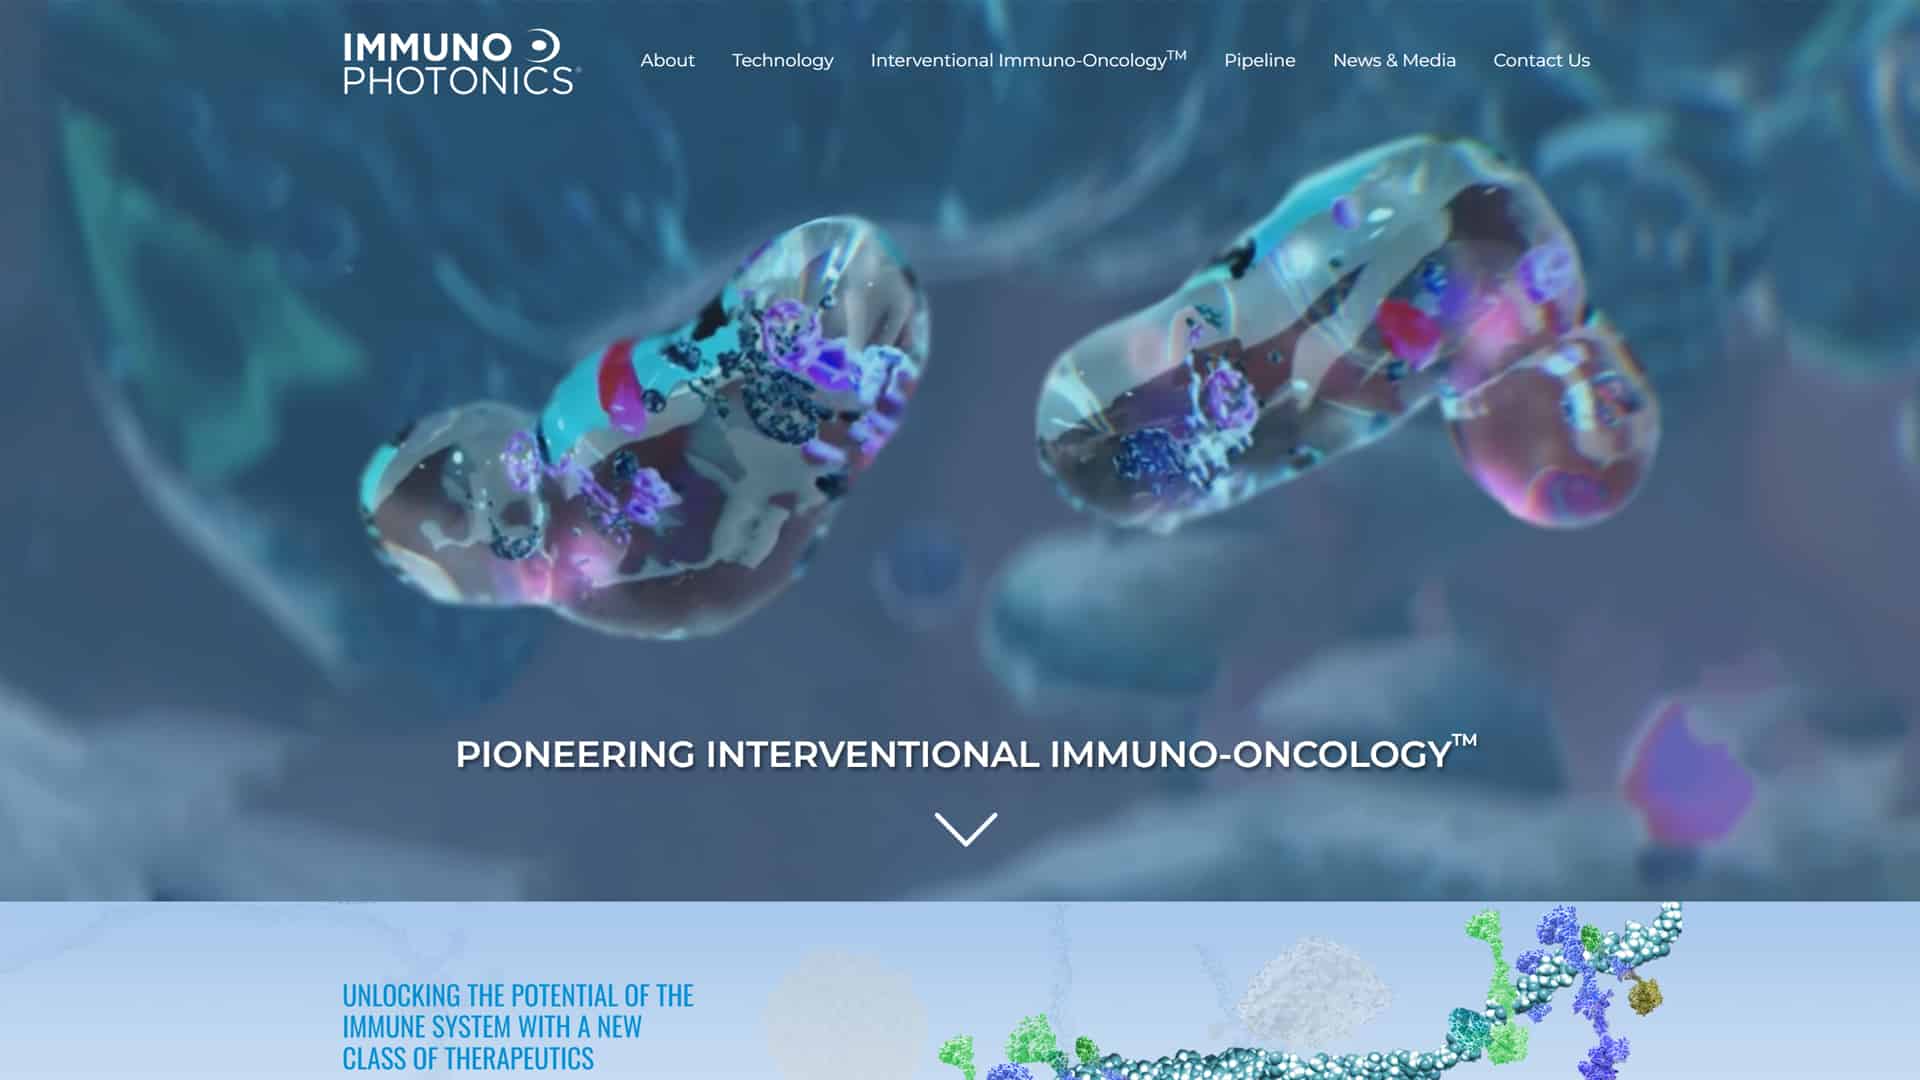 Immuno Photonics biotech website portfolio web project featured image